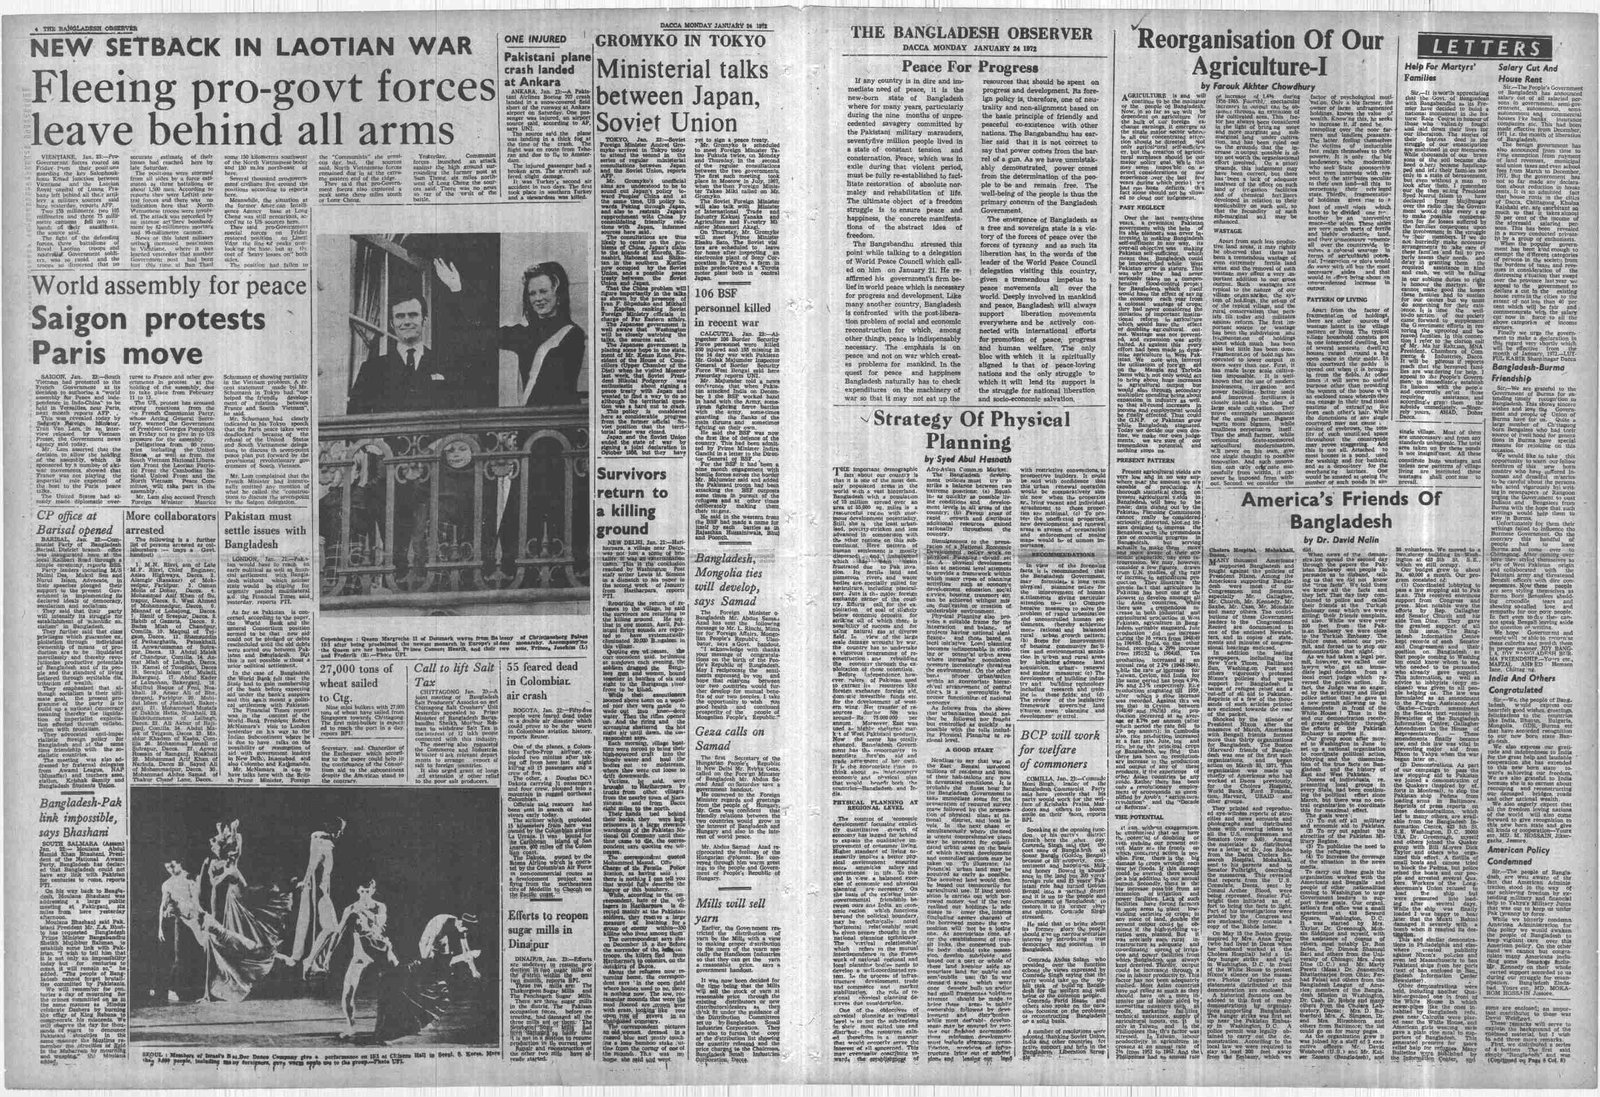 24JAN1972-Bangladesh Observer-Regular-Page 4 and 5